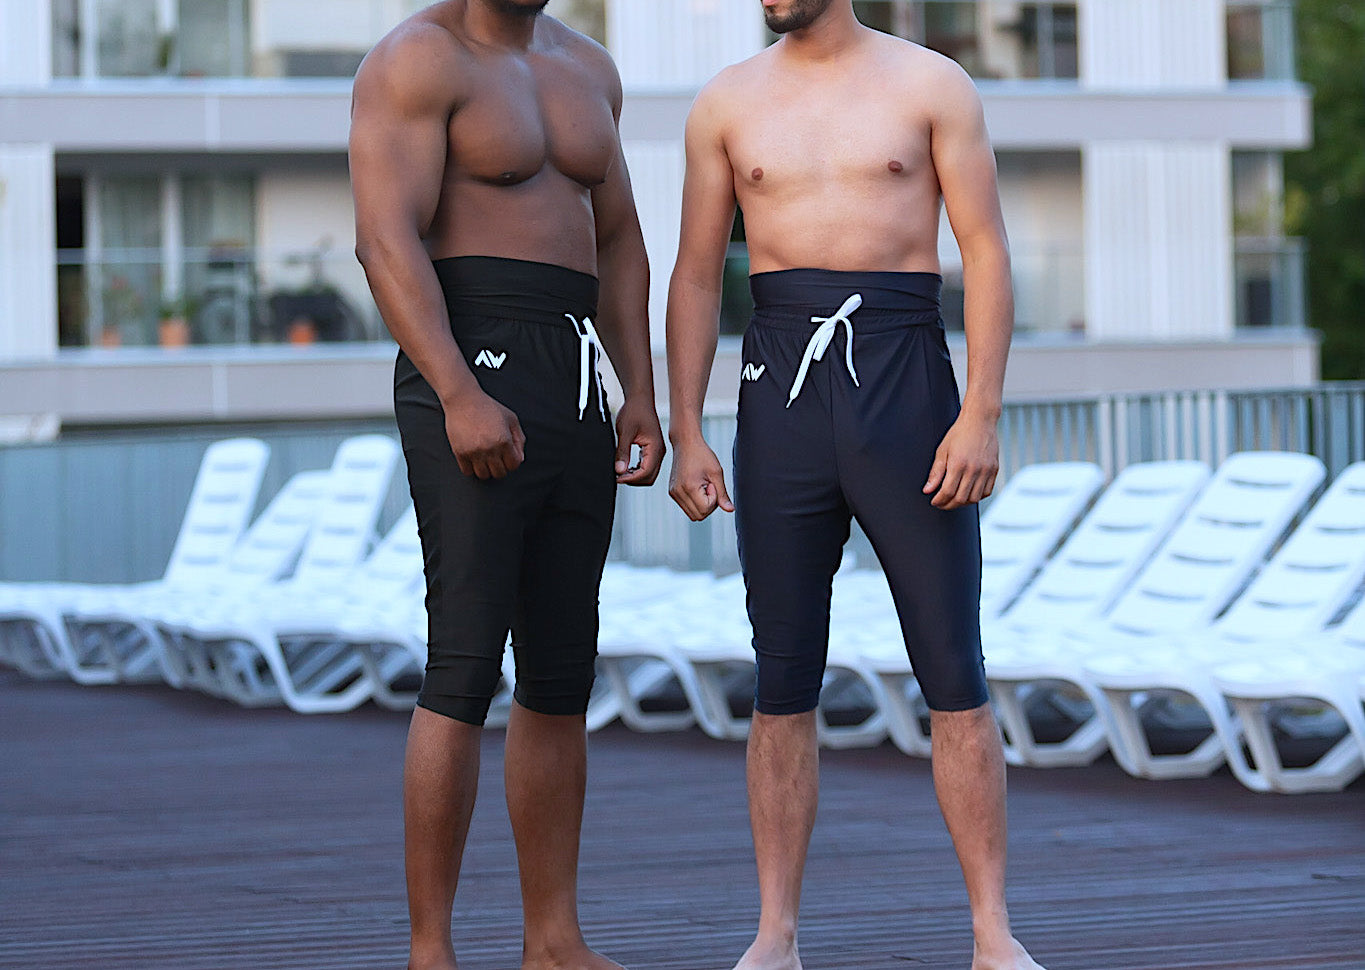 2 hommes qui portent un maillot de bain qui cache la awra